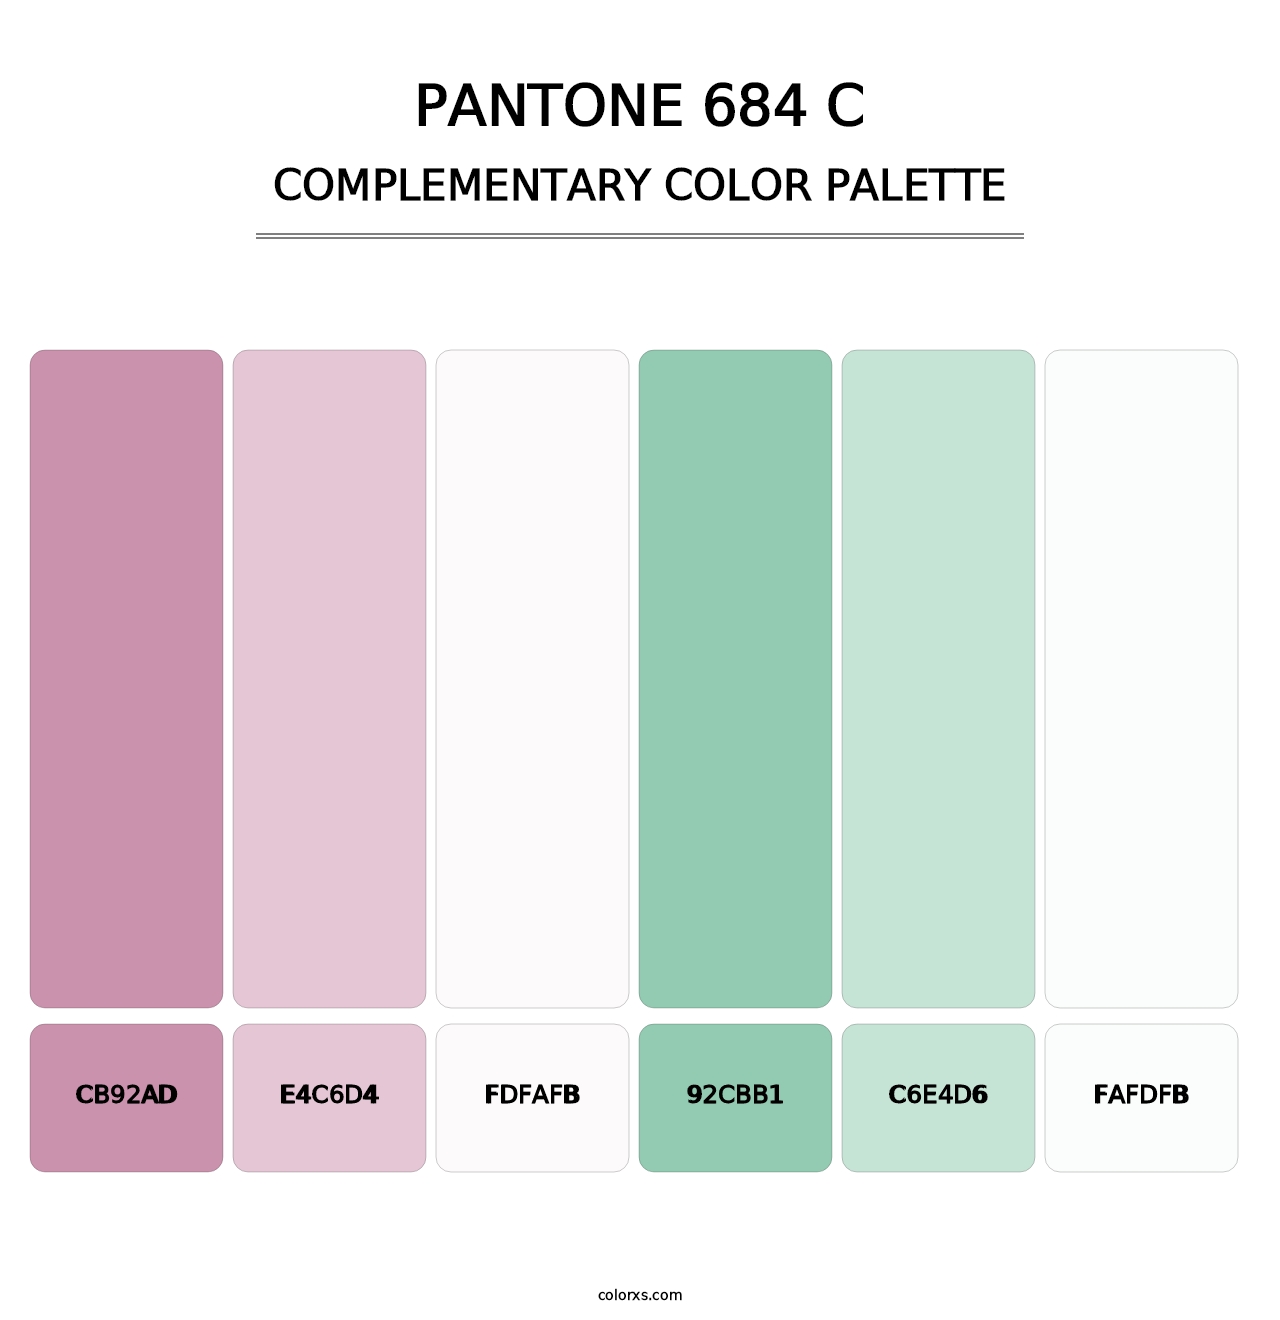 PANTONE 684 C - Complementary Color Palette